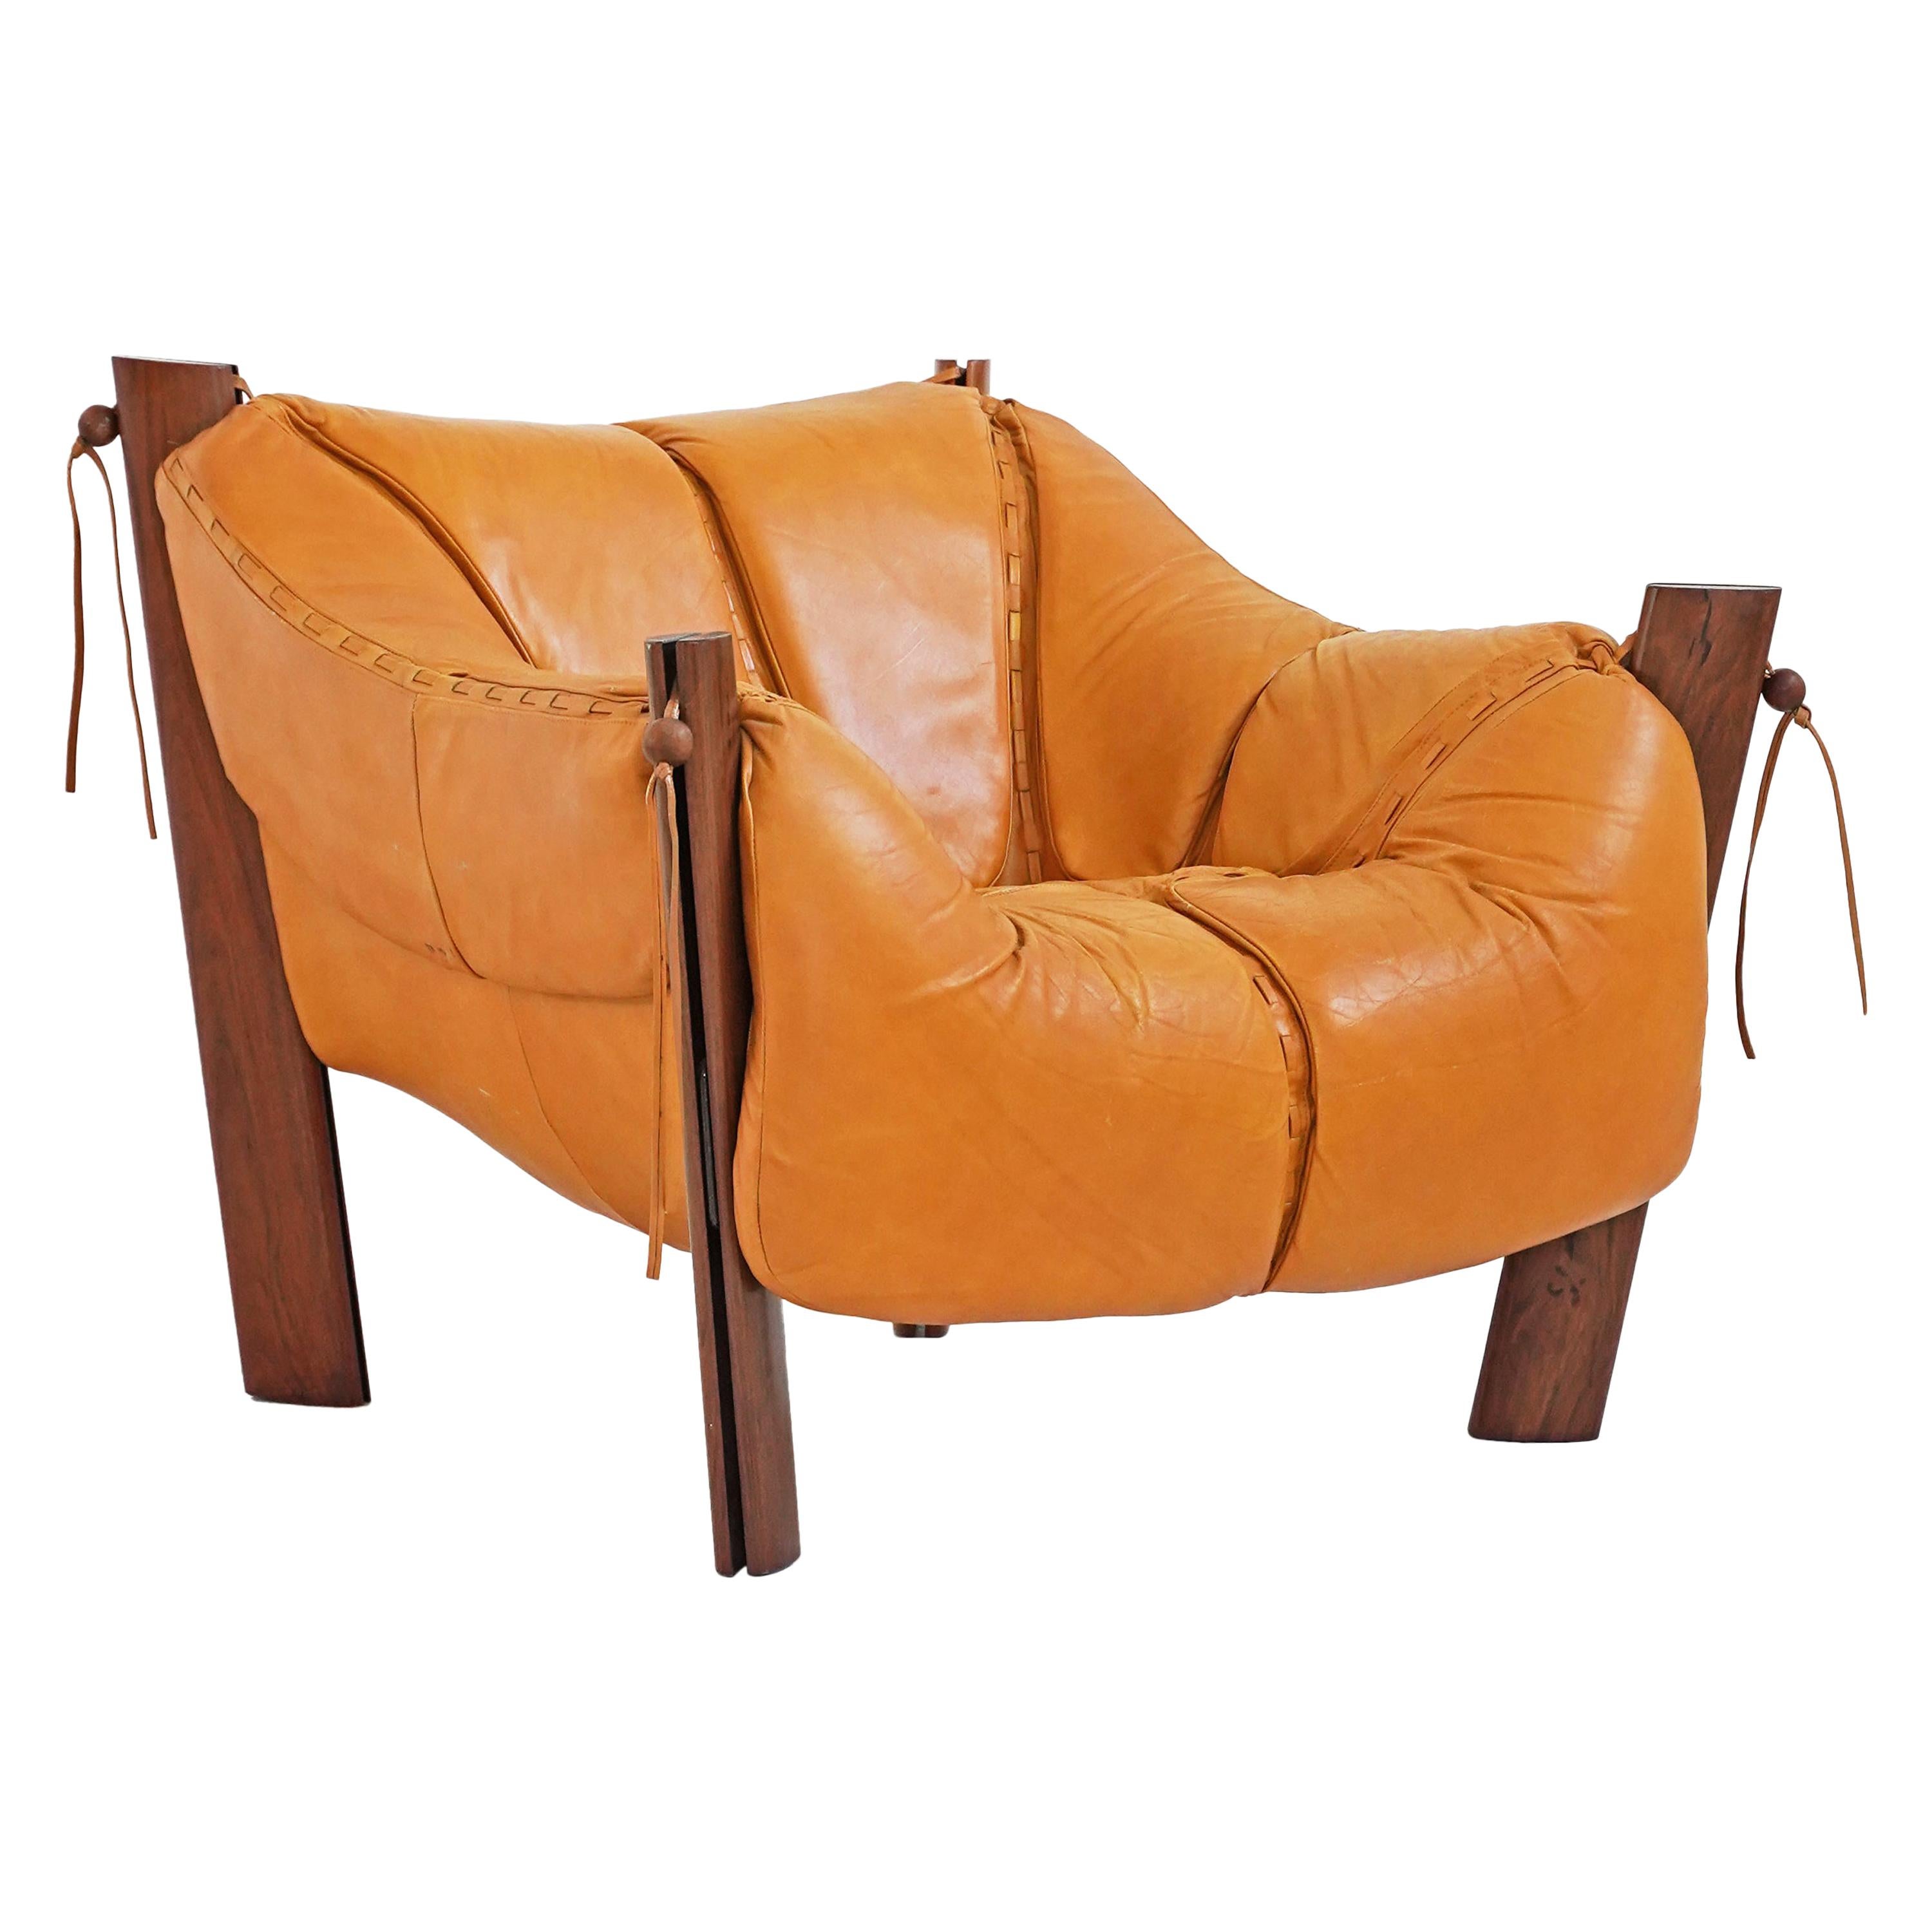 MP-211 Lounge Chair by Brazilian Designer Percival Lafer for Móveis Lafer